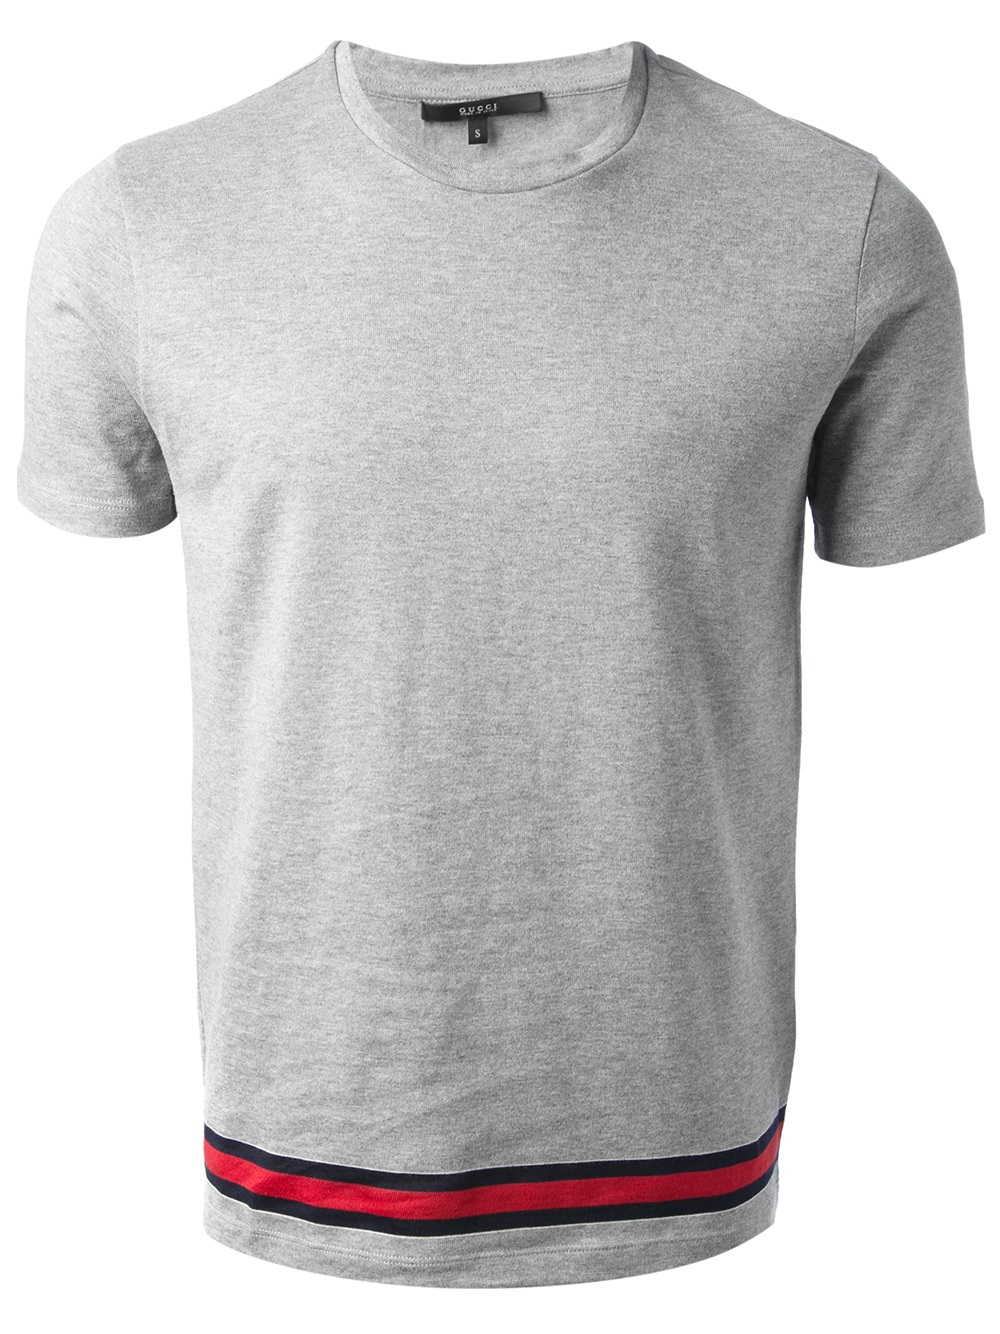 Gucci Classic Tshirt in Grey (Gray) for Men - Lyst